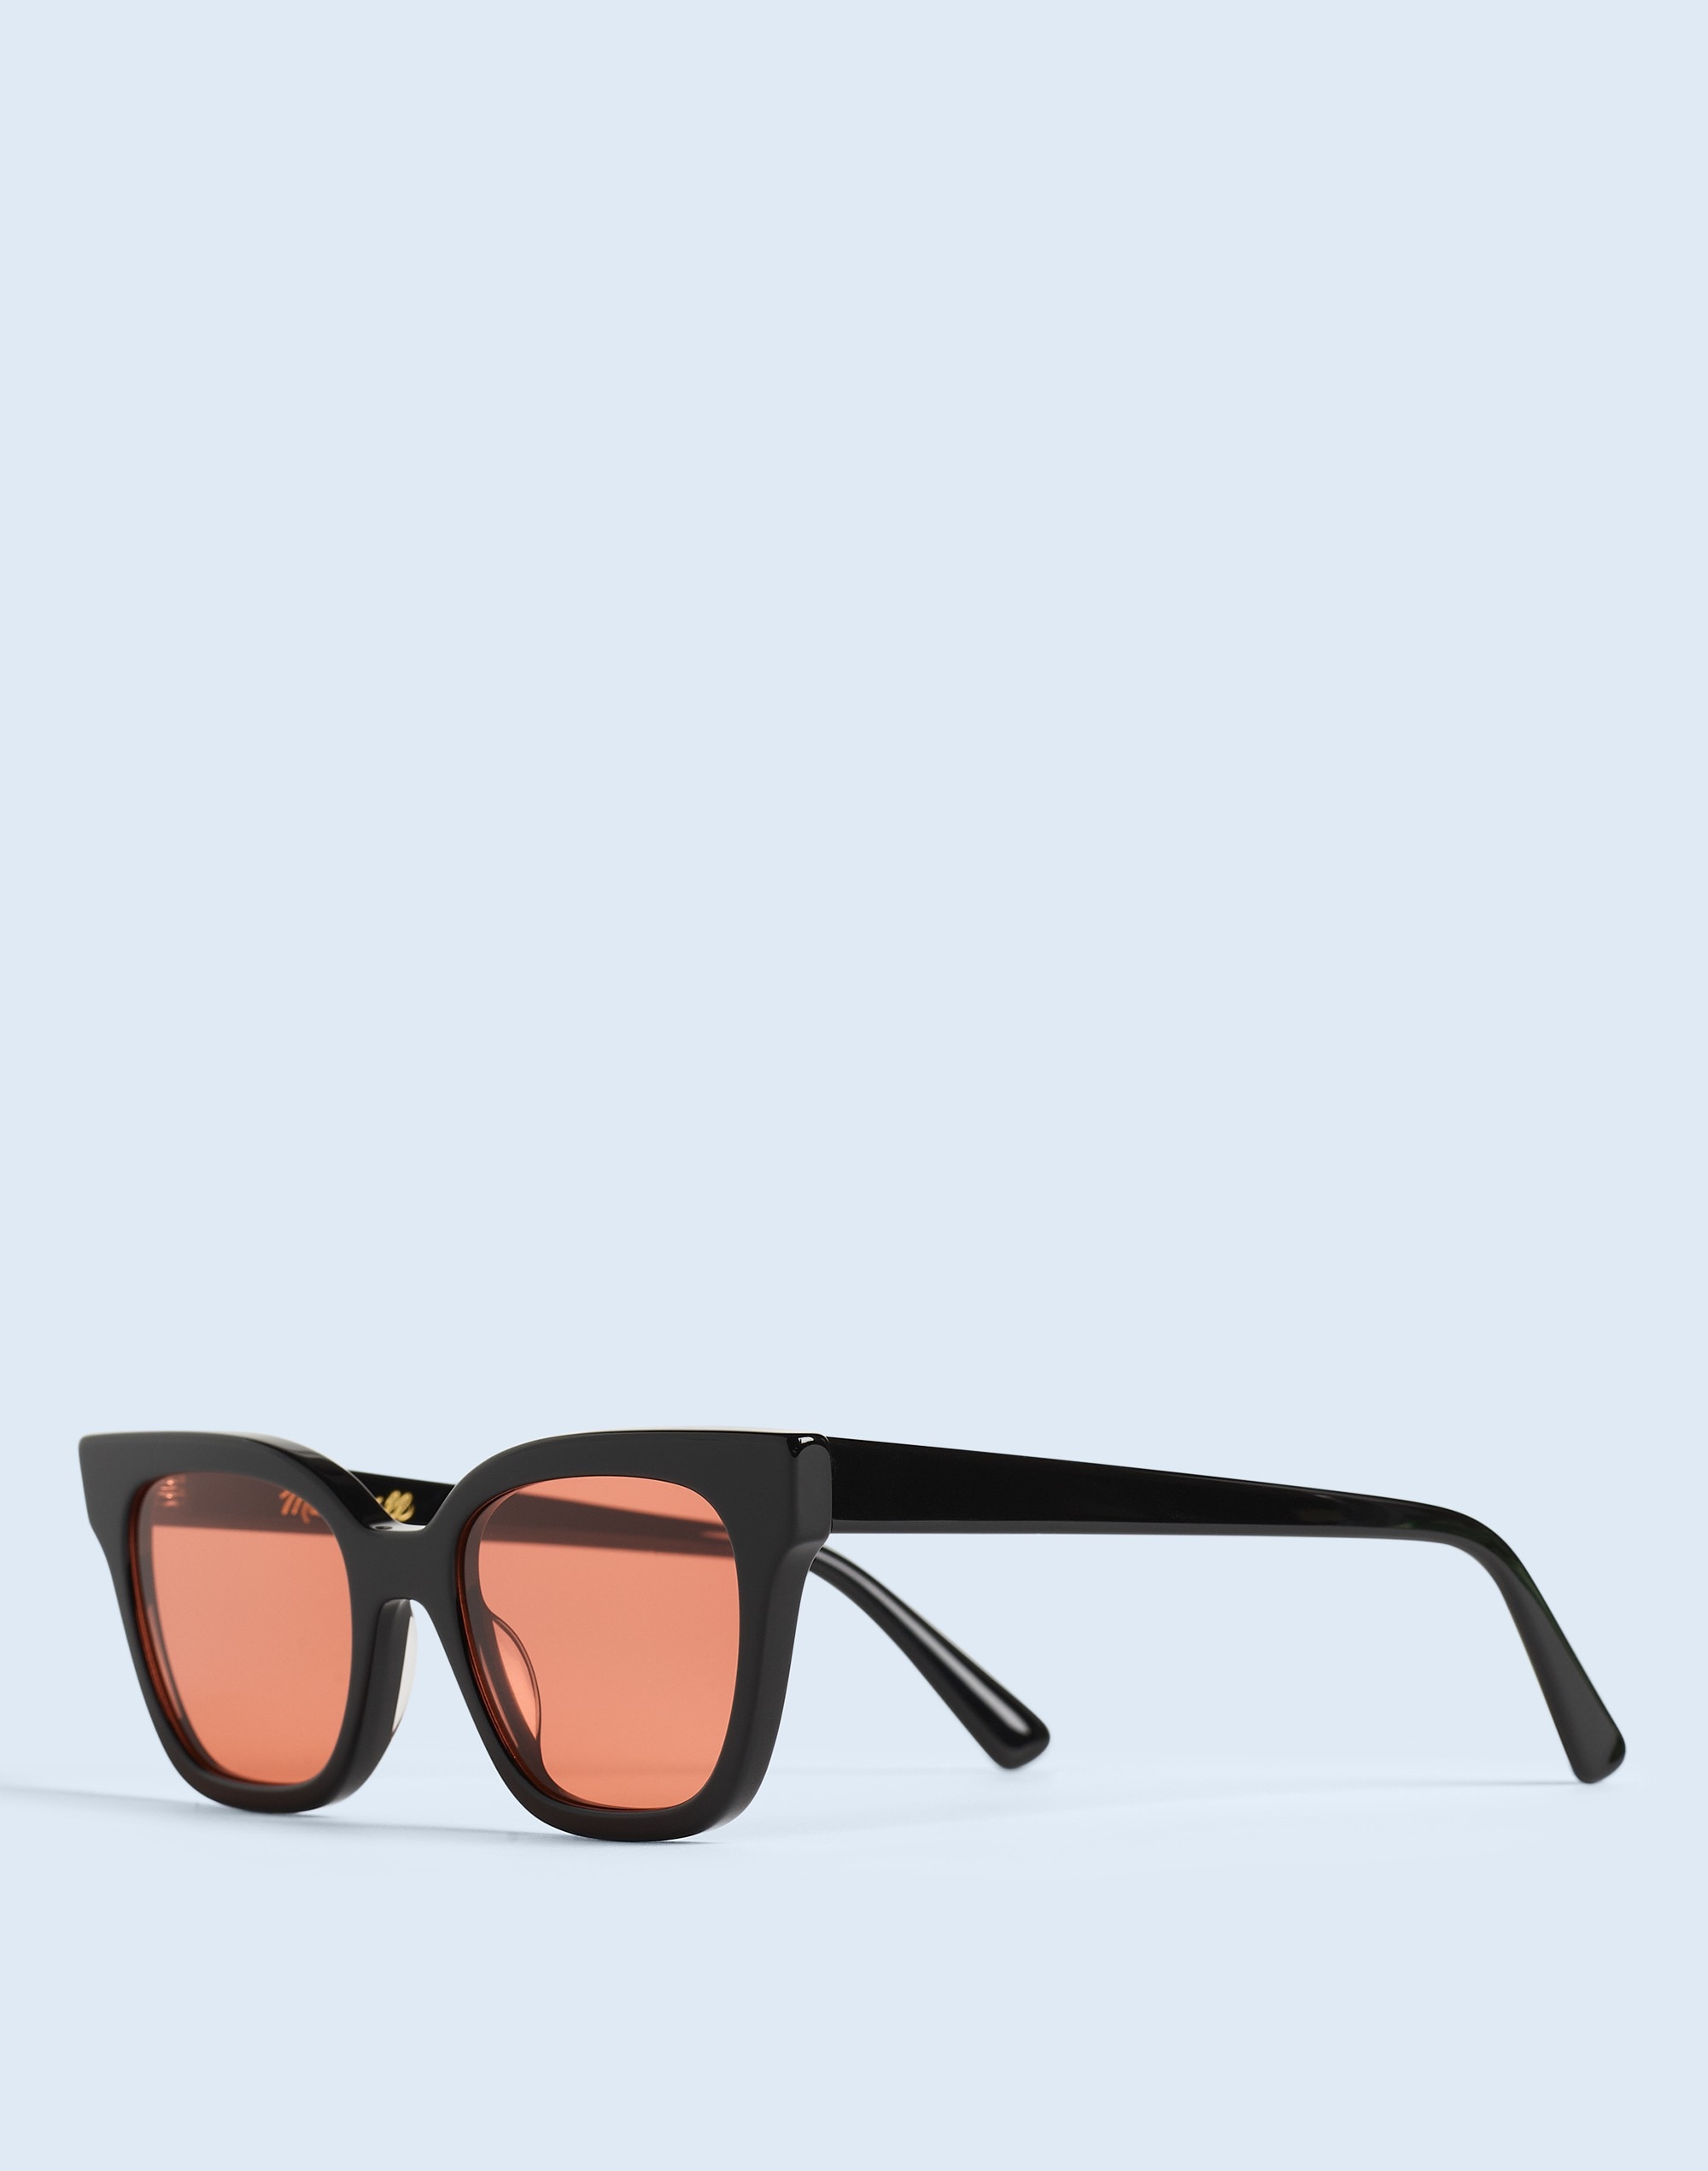 Mw Pierport Sunglasses In True Black